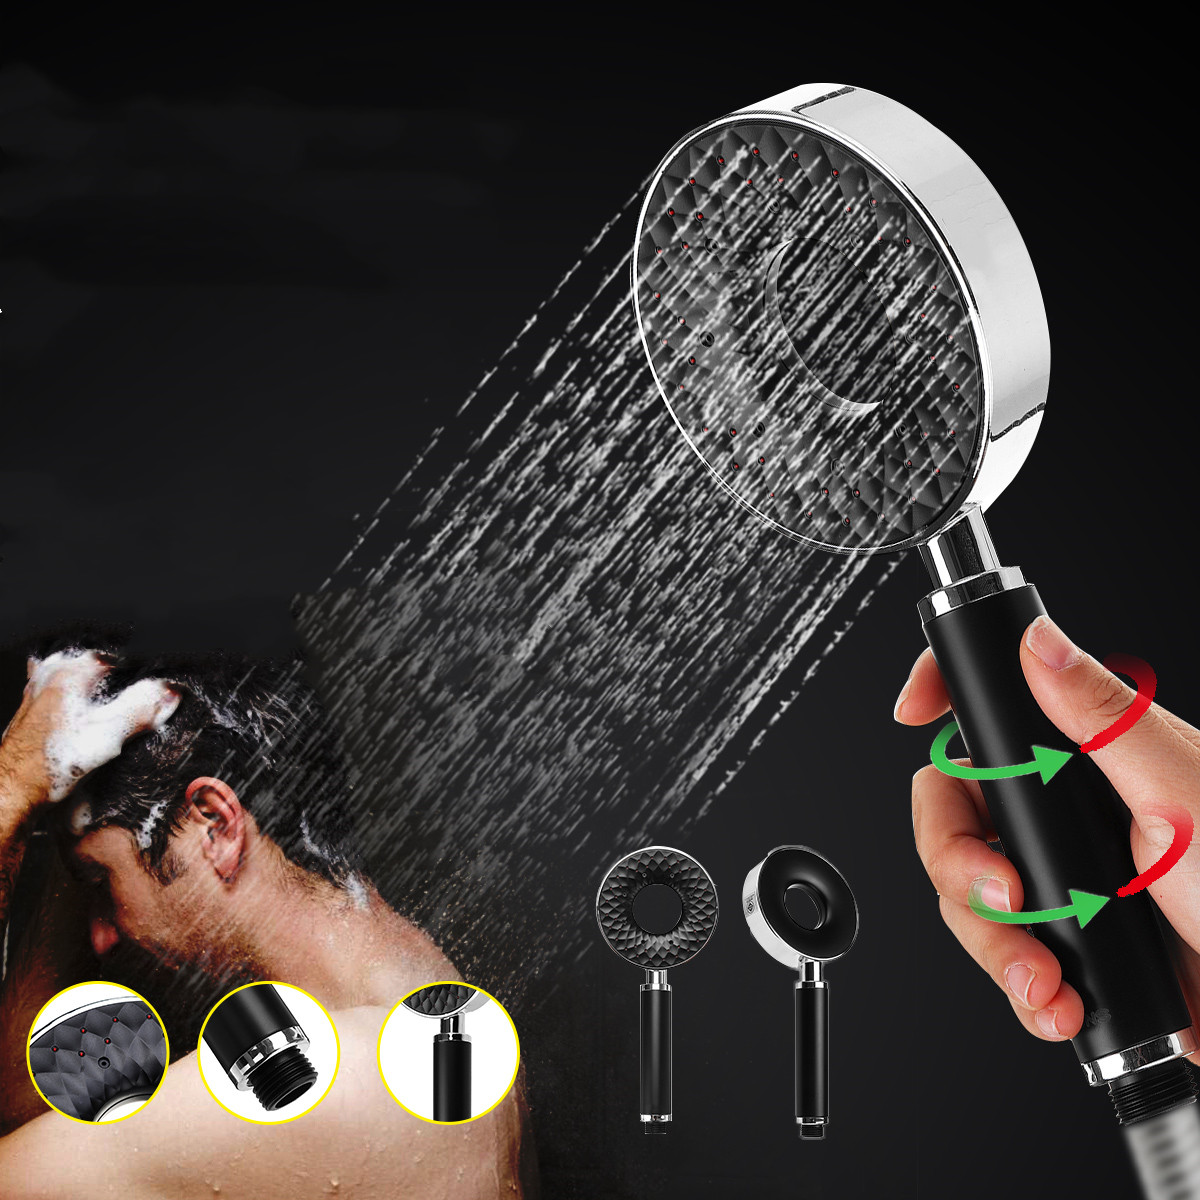 

3 Gear Adjustment Round Hollow Shower Head Pressurized Water Saving Home Bathroom Take A Shower